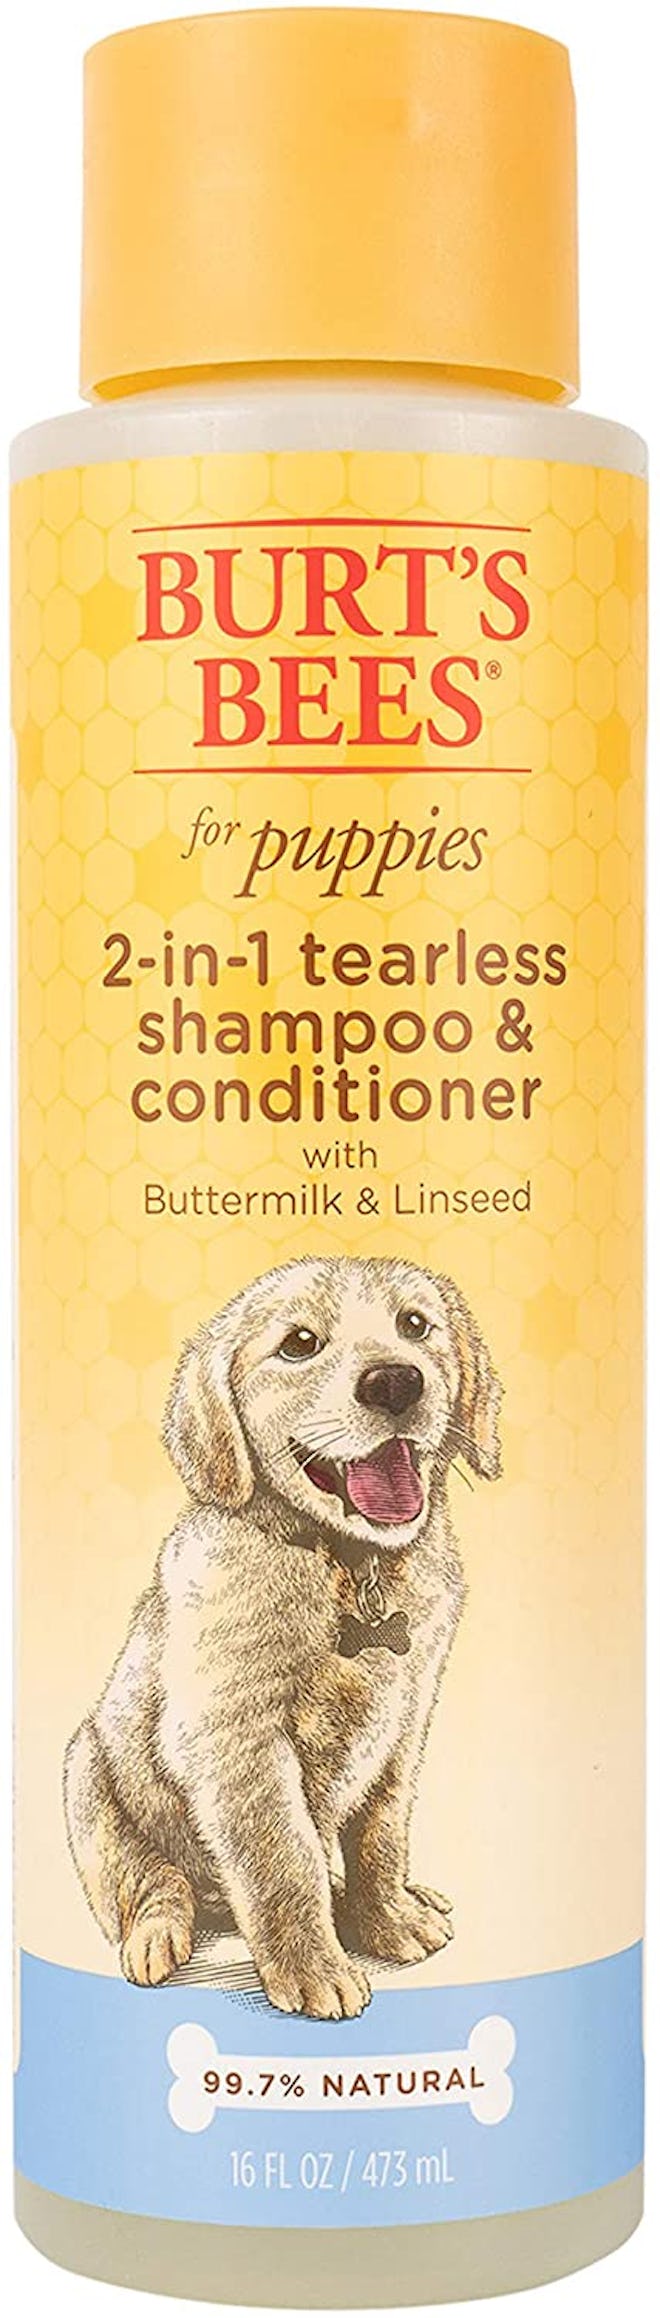 Burt's Bees Natural Dog Shampoo